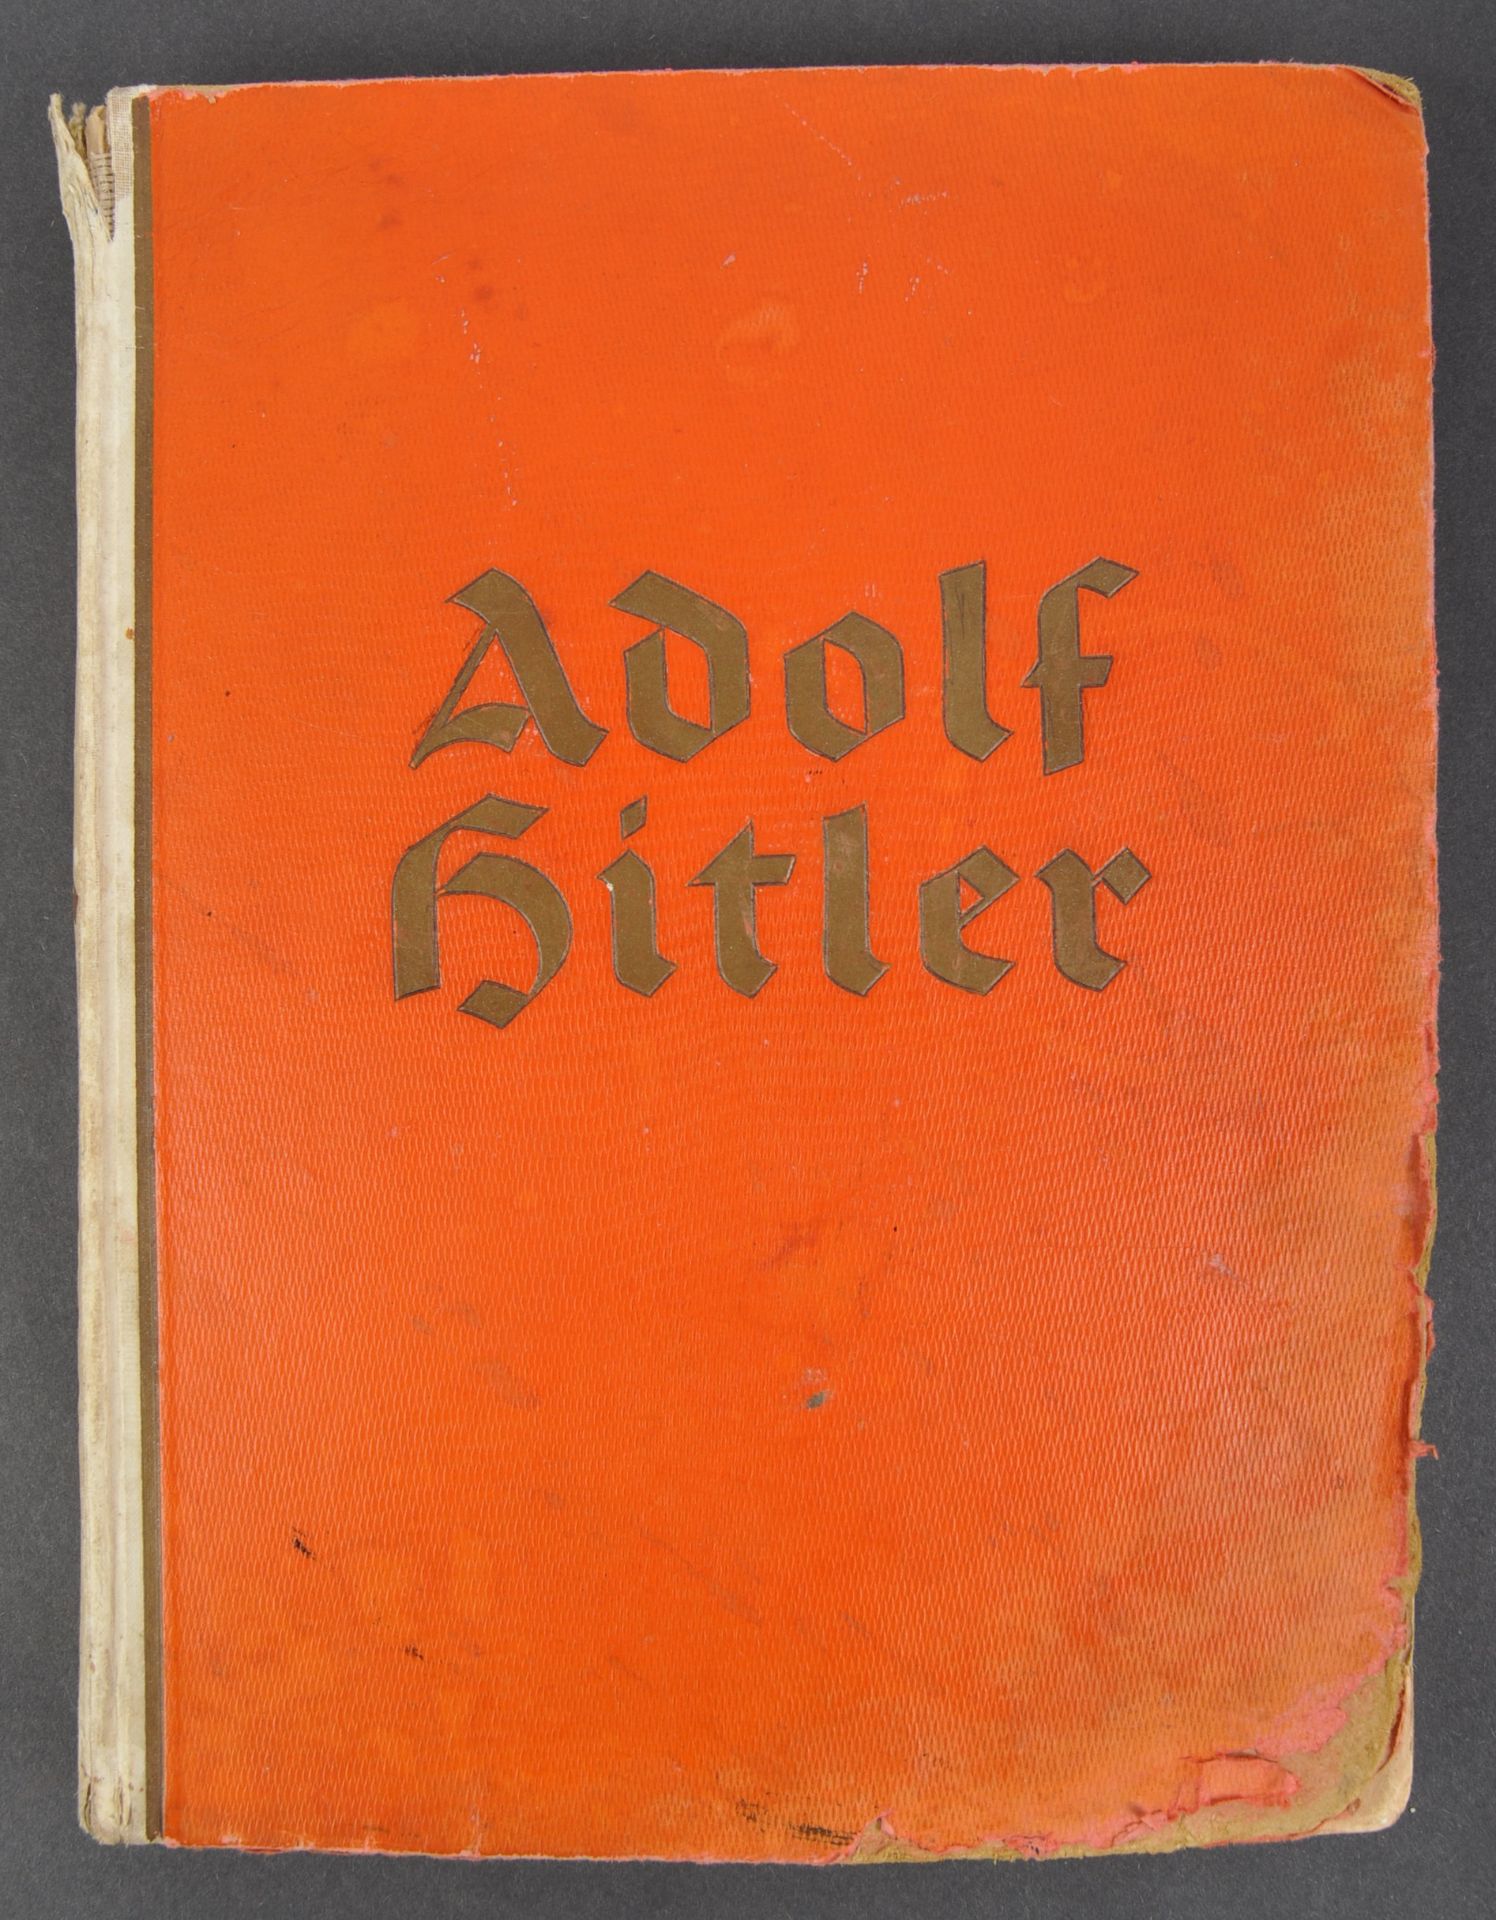 ADOLF HITLER - ORIGINAL 1935 NAZI GERMAN CIGARETTE CARD ALBUM